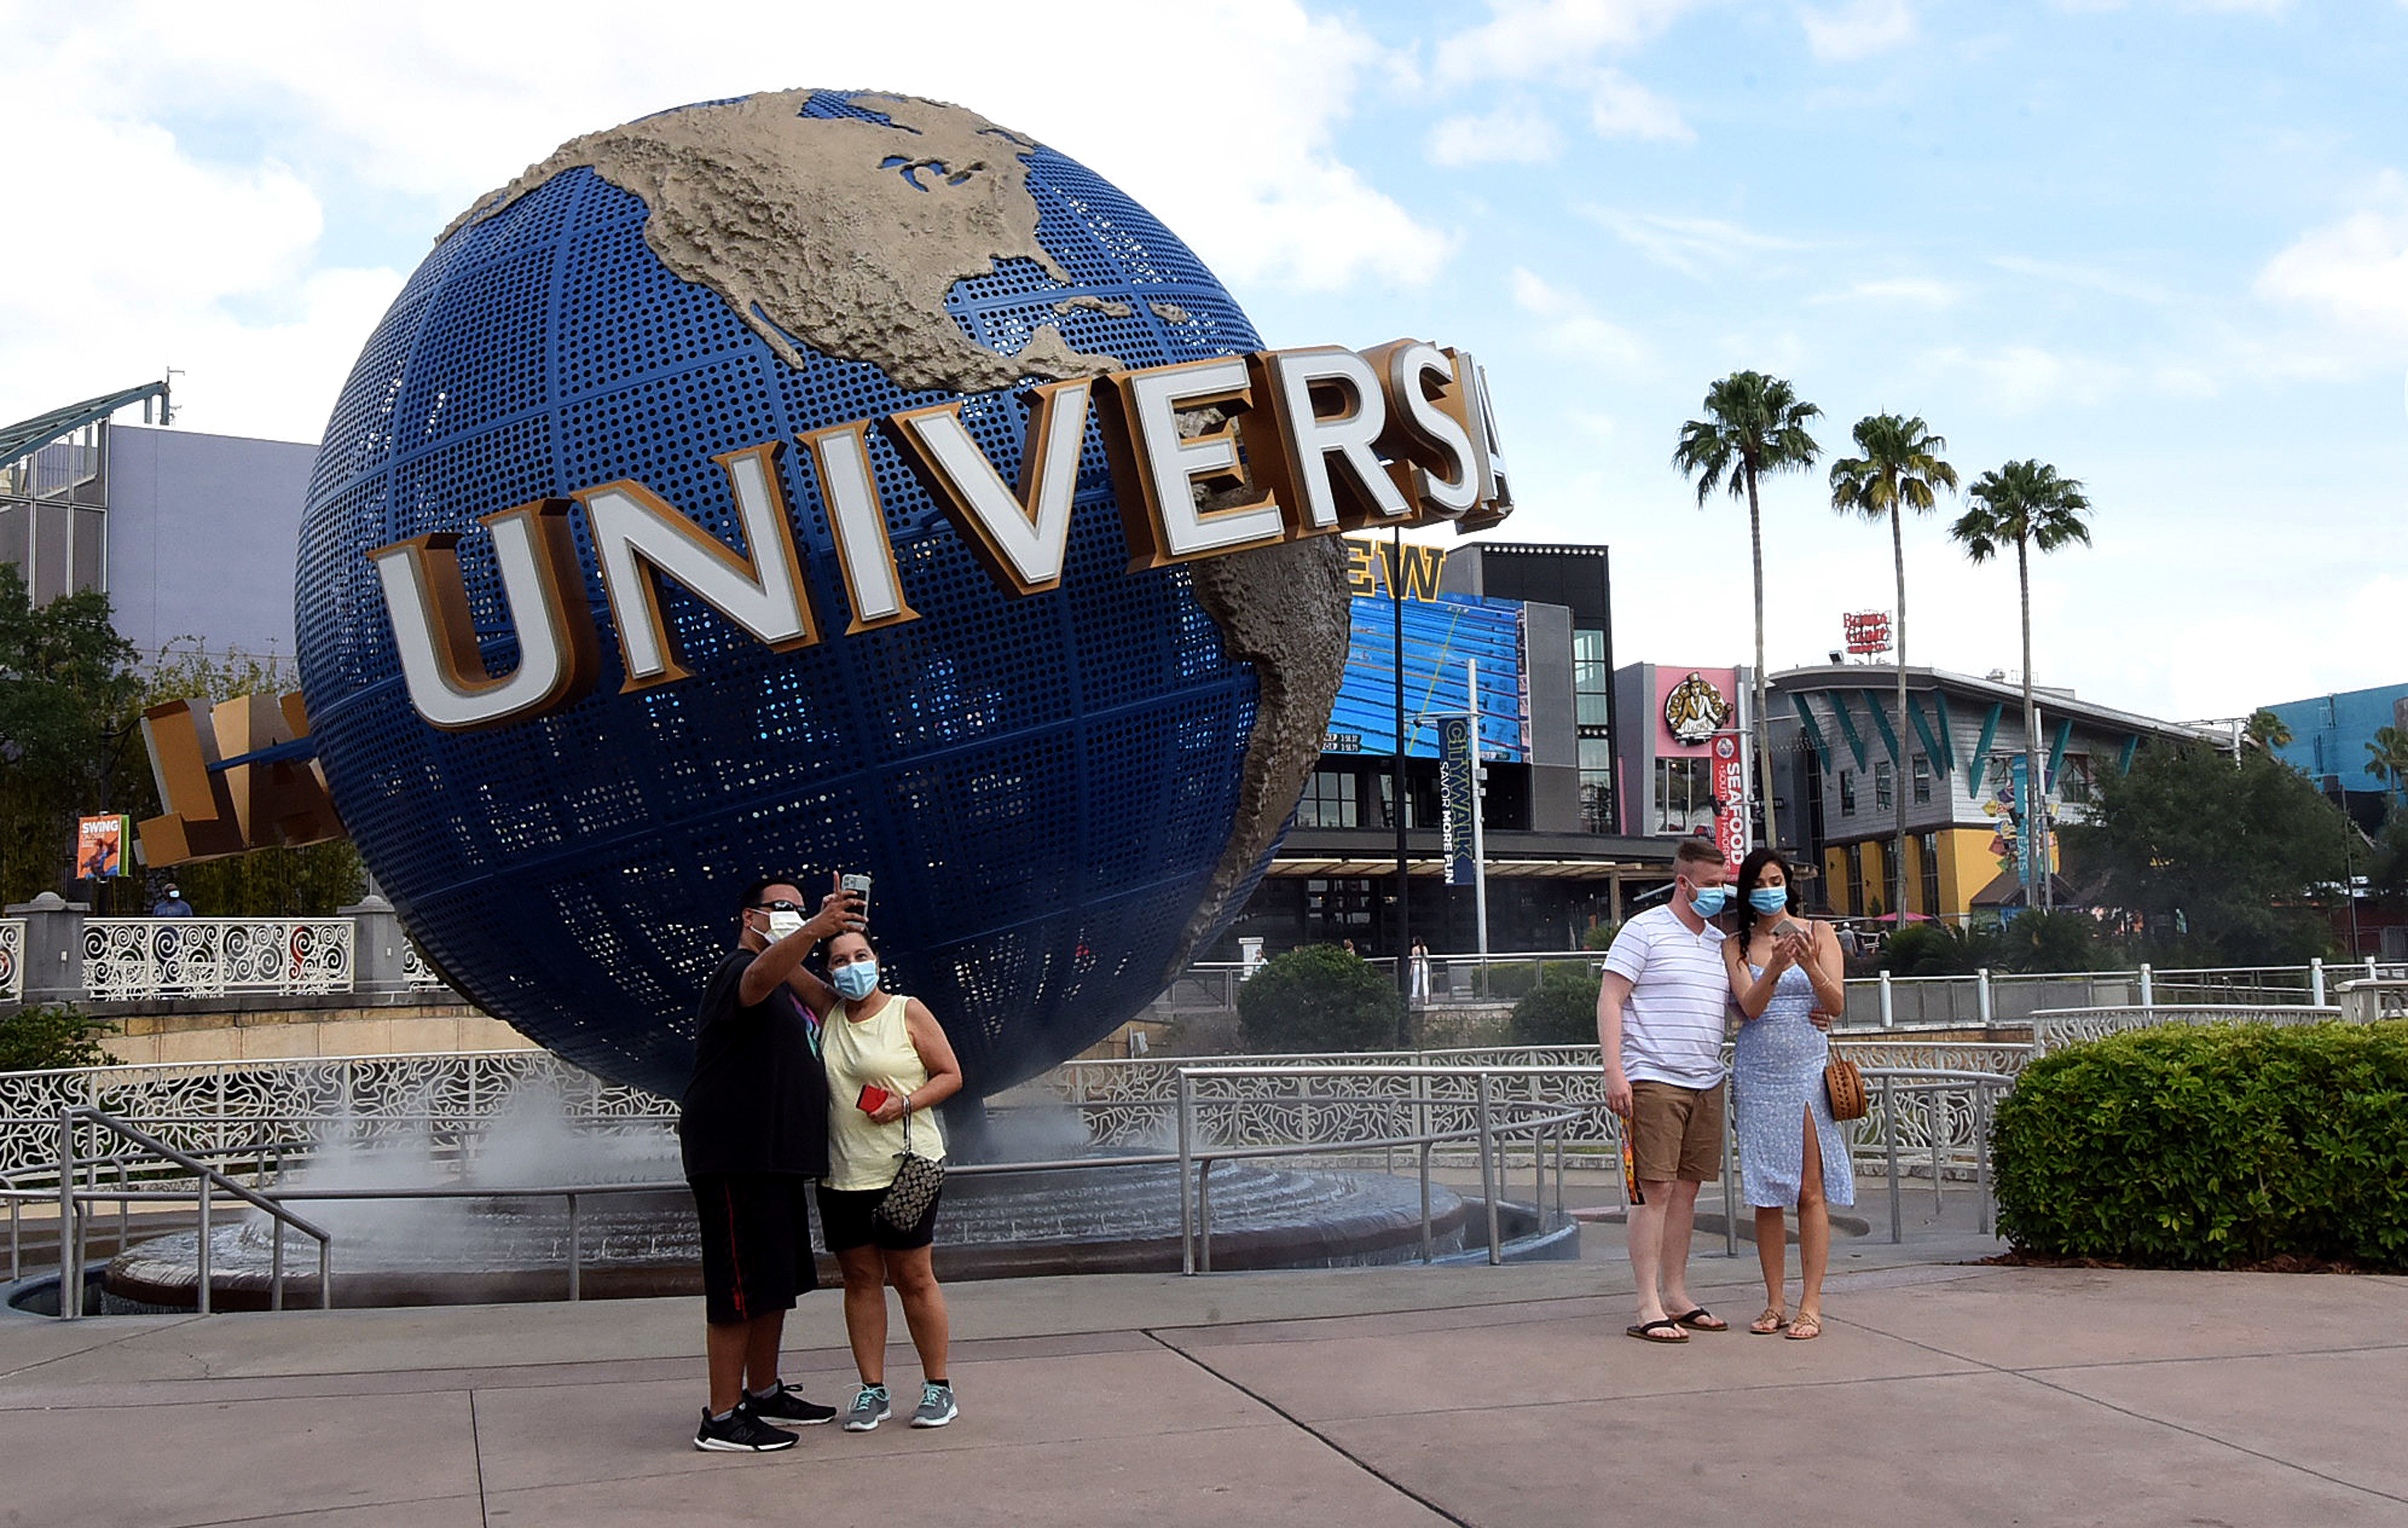 Universal Orlando CityWalk Begins to Reopen in Orlando, US